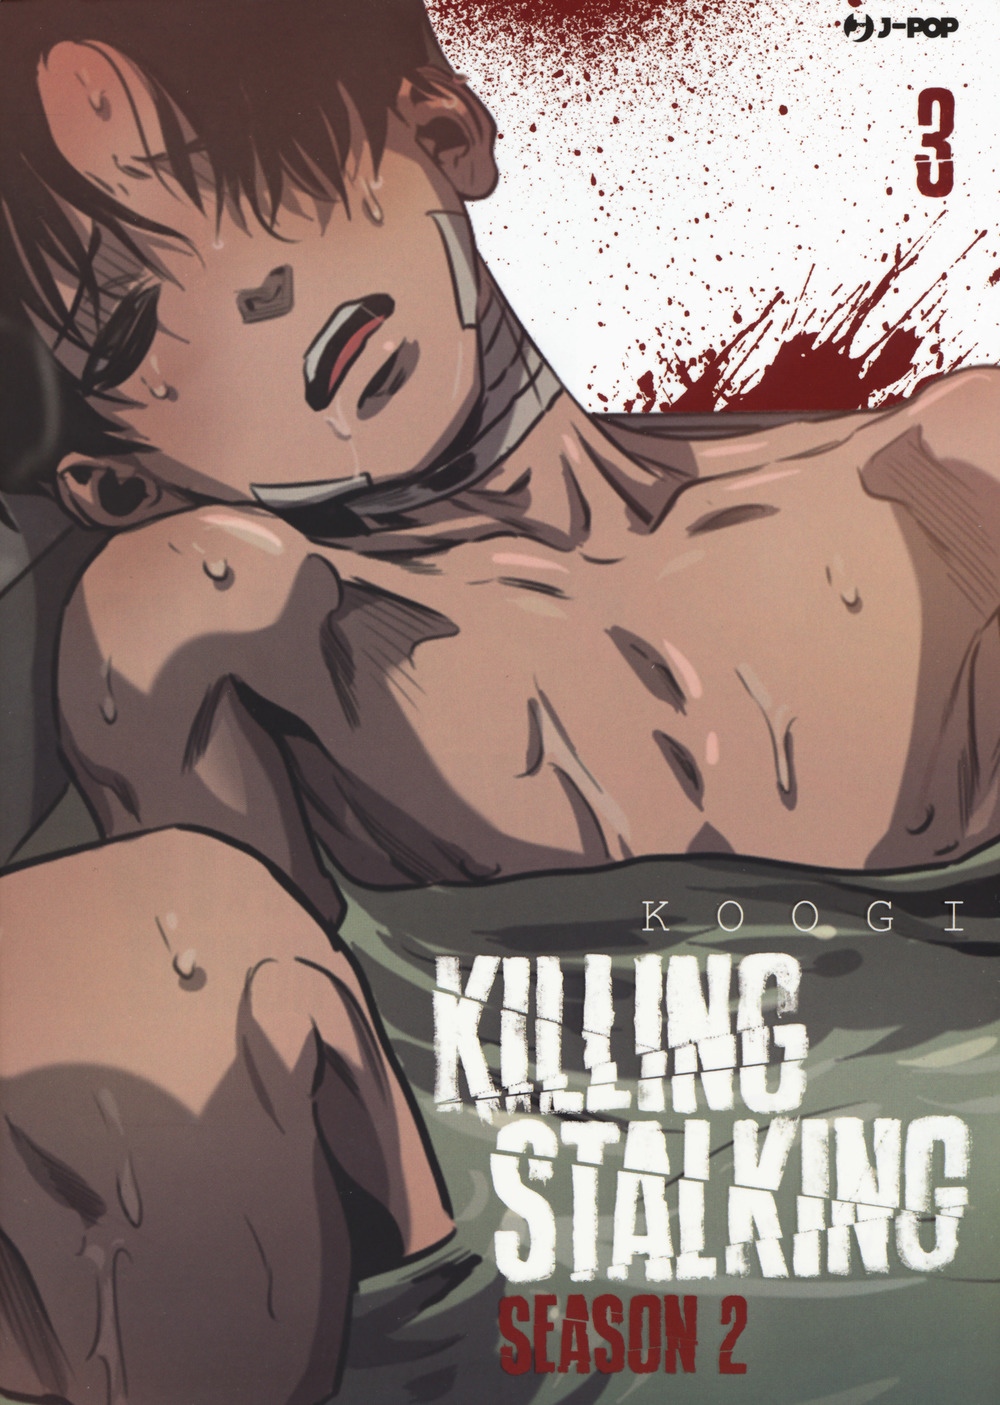 Killing stalking. Season 2. Vol. 3